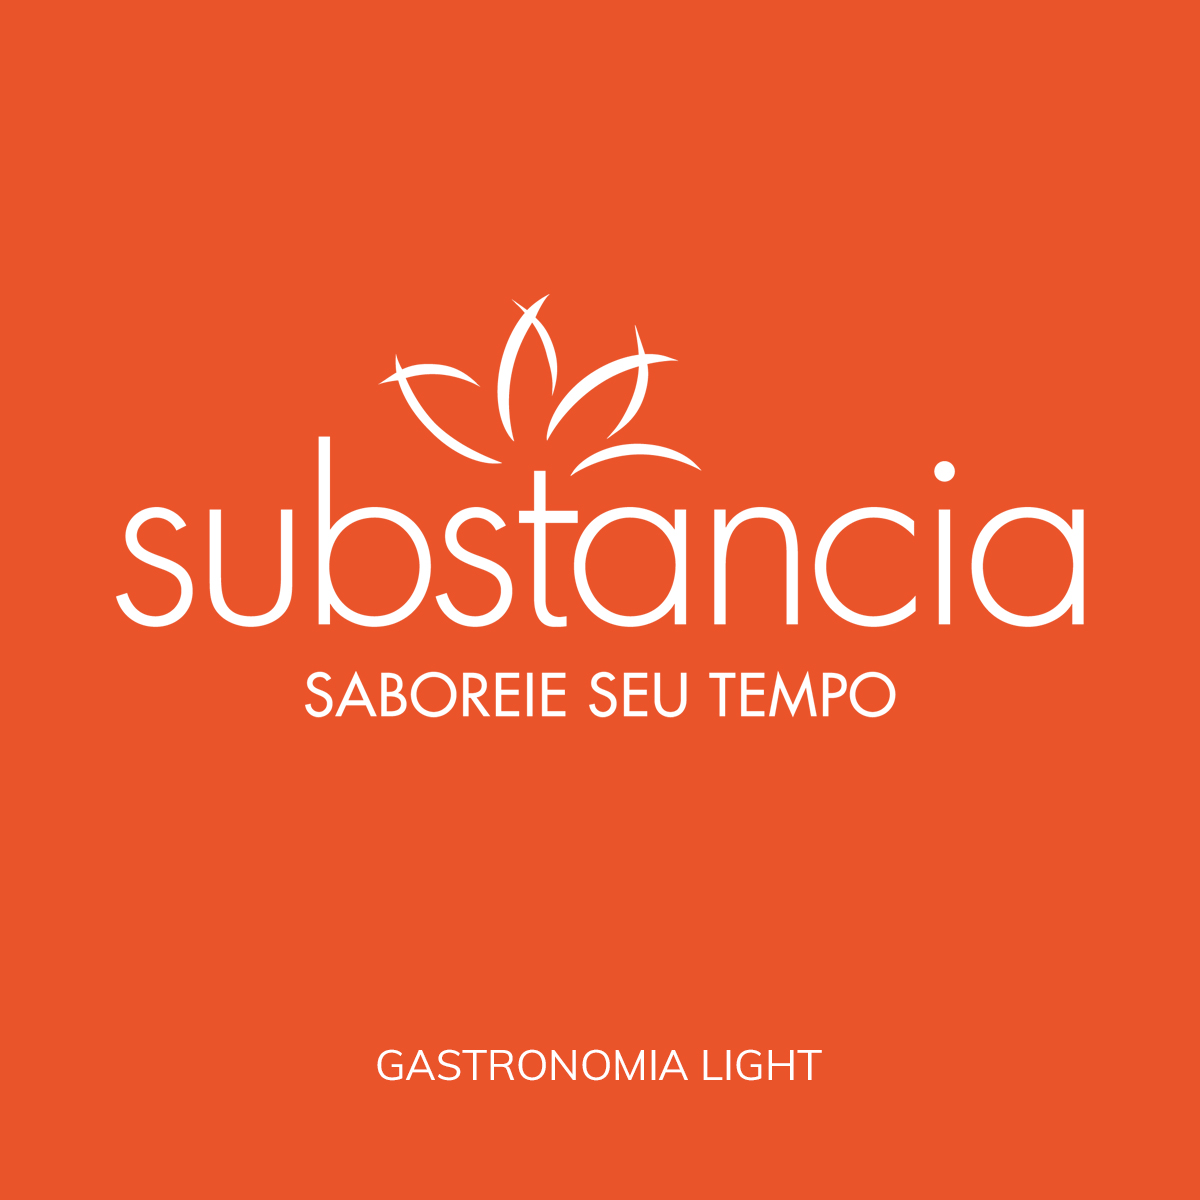 Substancia gastronomia light